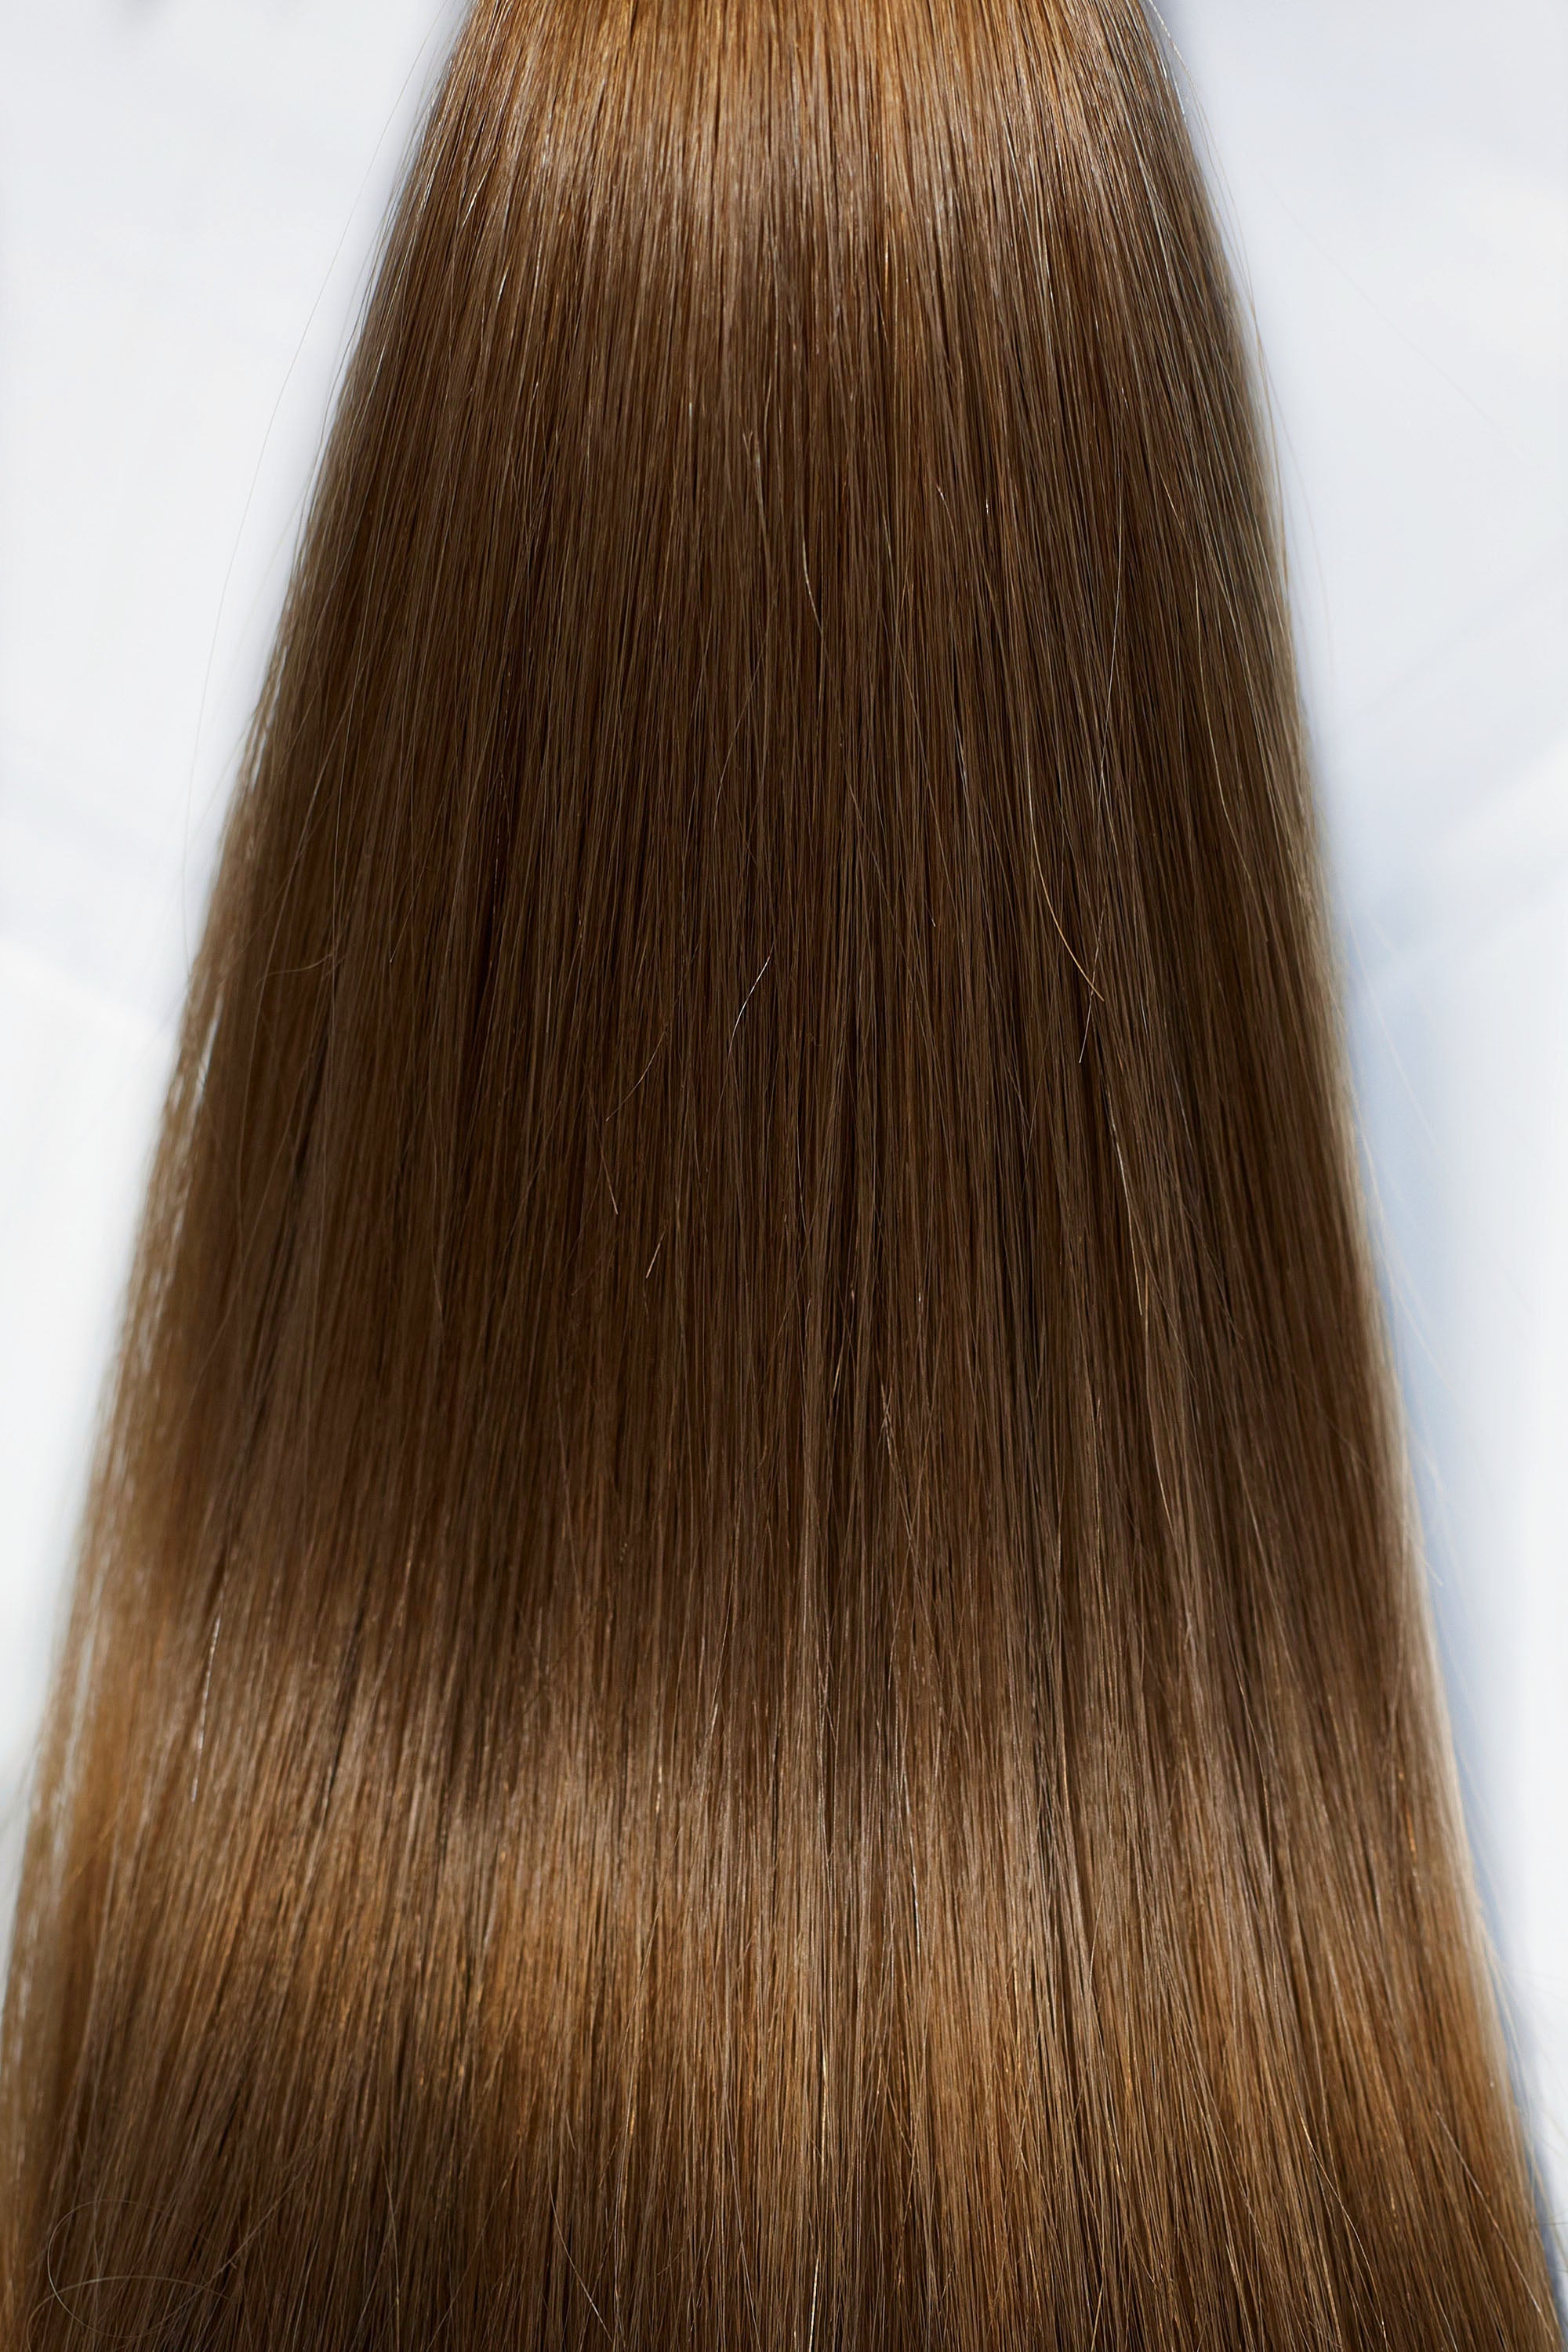 Behair professional Keratin Tip "Premium" 22" (55cm) Natural Straight Chestnut #6 - 25g (Standart - 0.7g each pcs) hair extensions